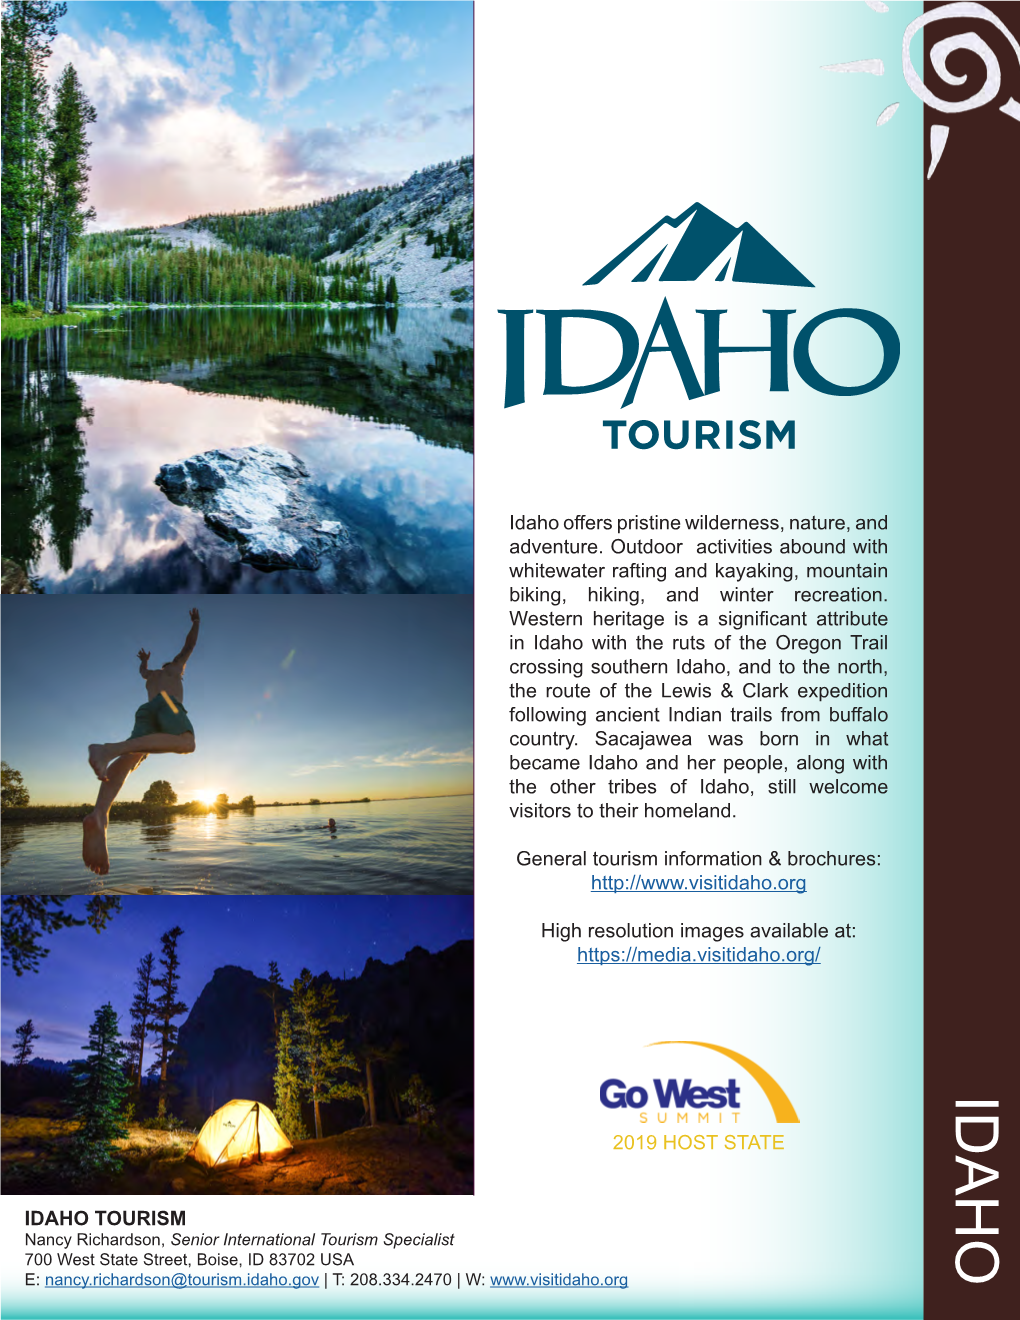 Idaho Offers Pristine Wilderness, Nature, and Adventure